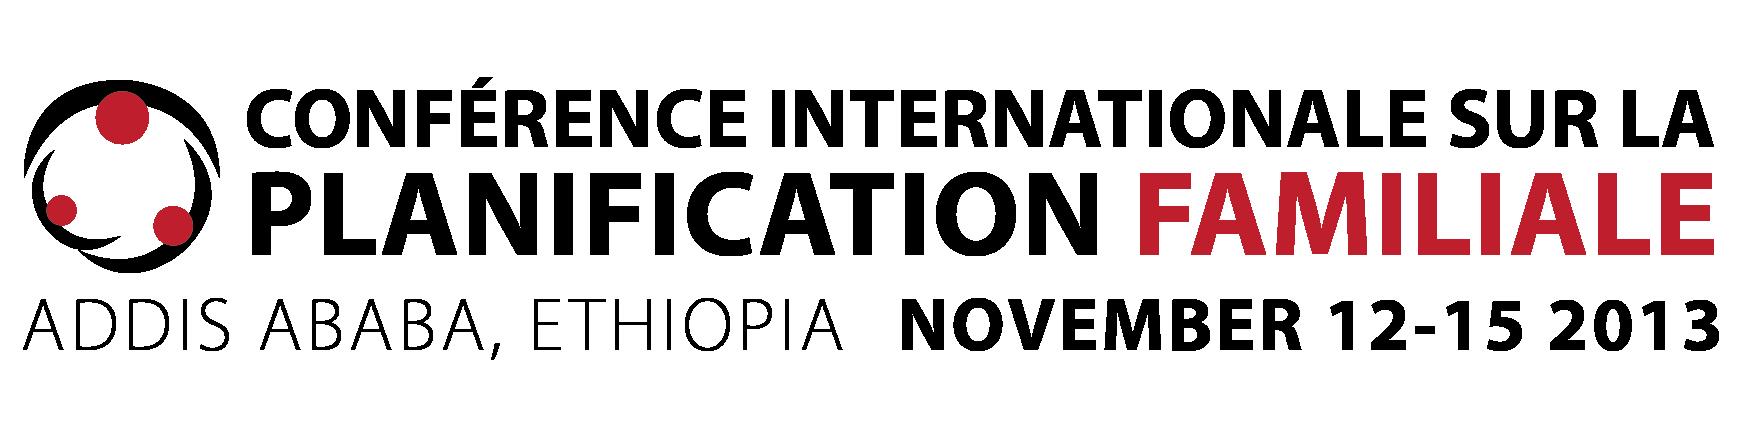 ICFP 2013 French logo